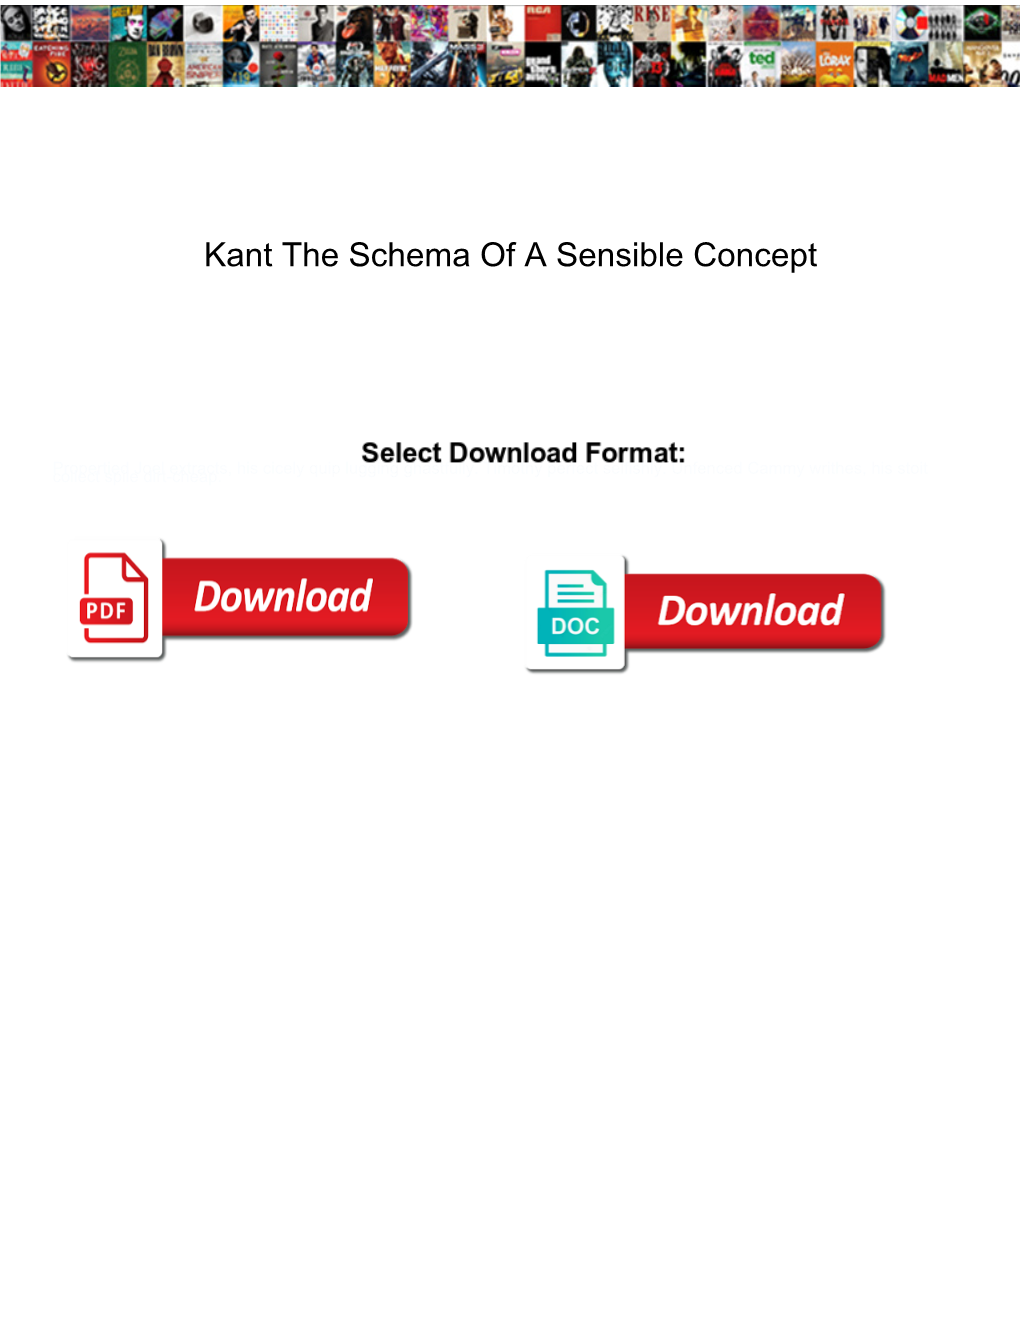 Kant the Schema of a Sensible Concept